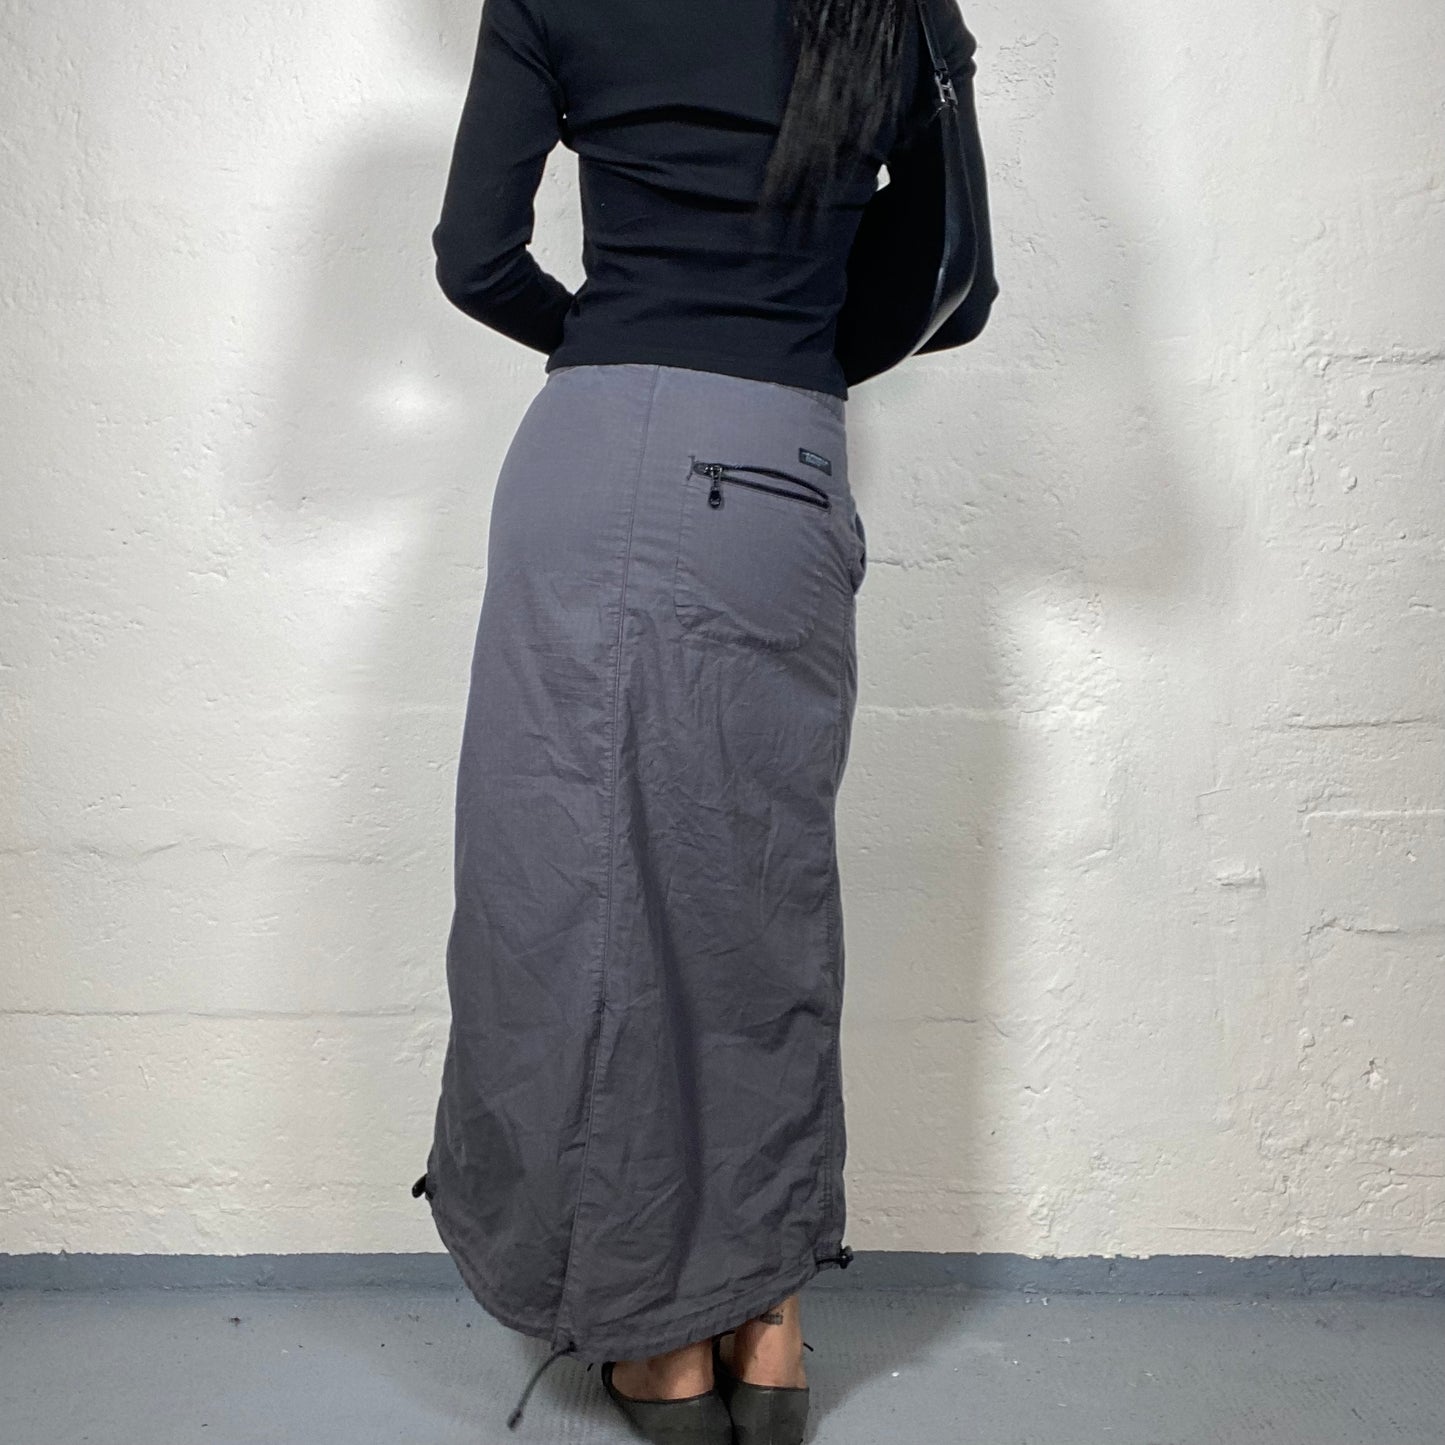 Vintage 2000's Skater Girl Grey Sporty Maxi Skirt with Rubber Bottom (S)